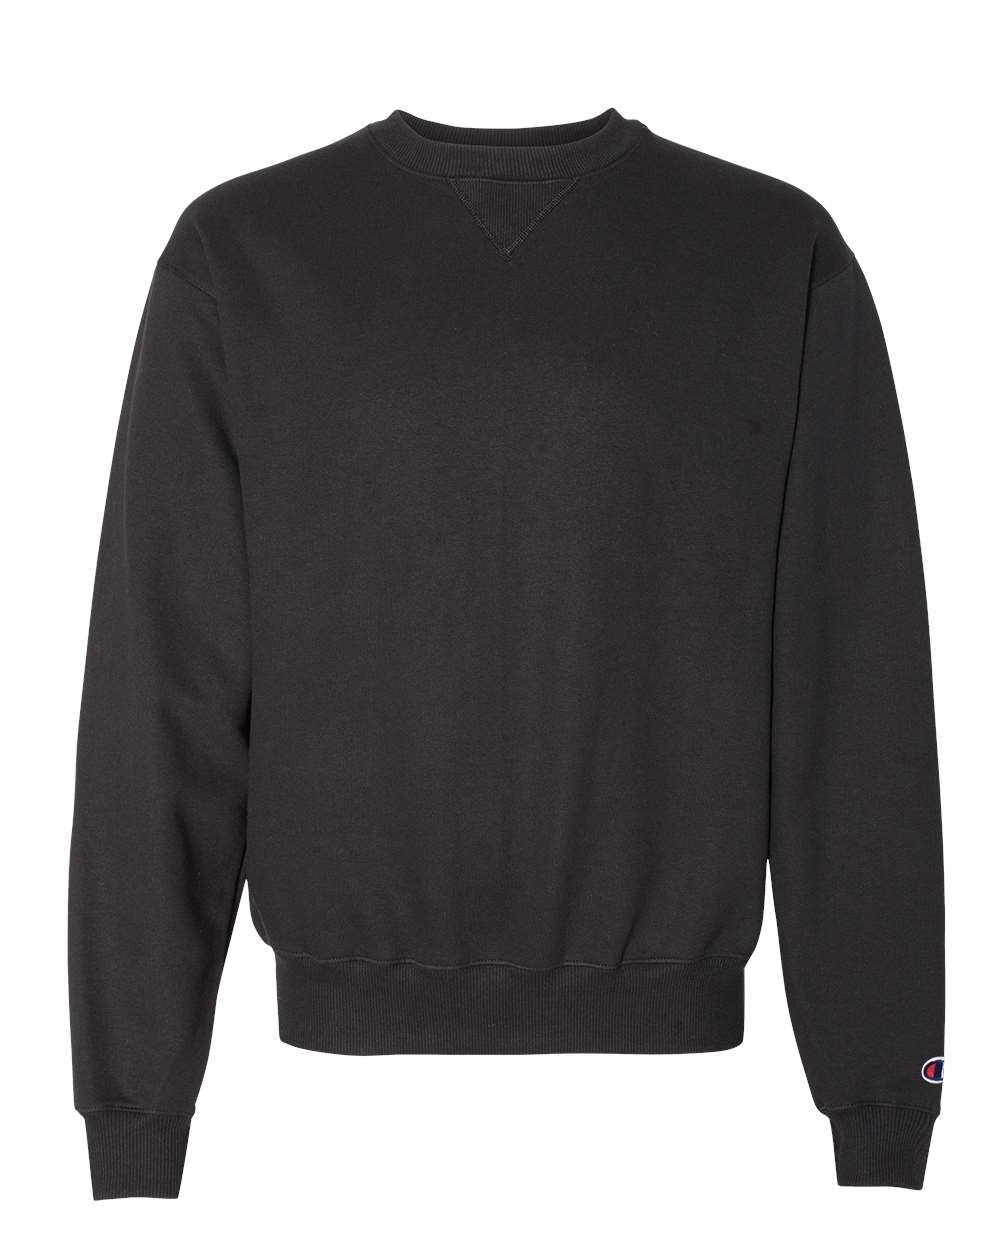 Cotton Max Sweatshirt - Champion S178 | Clothing Shop Online